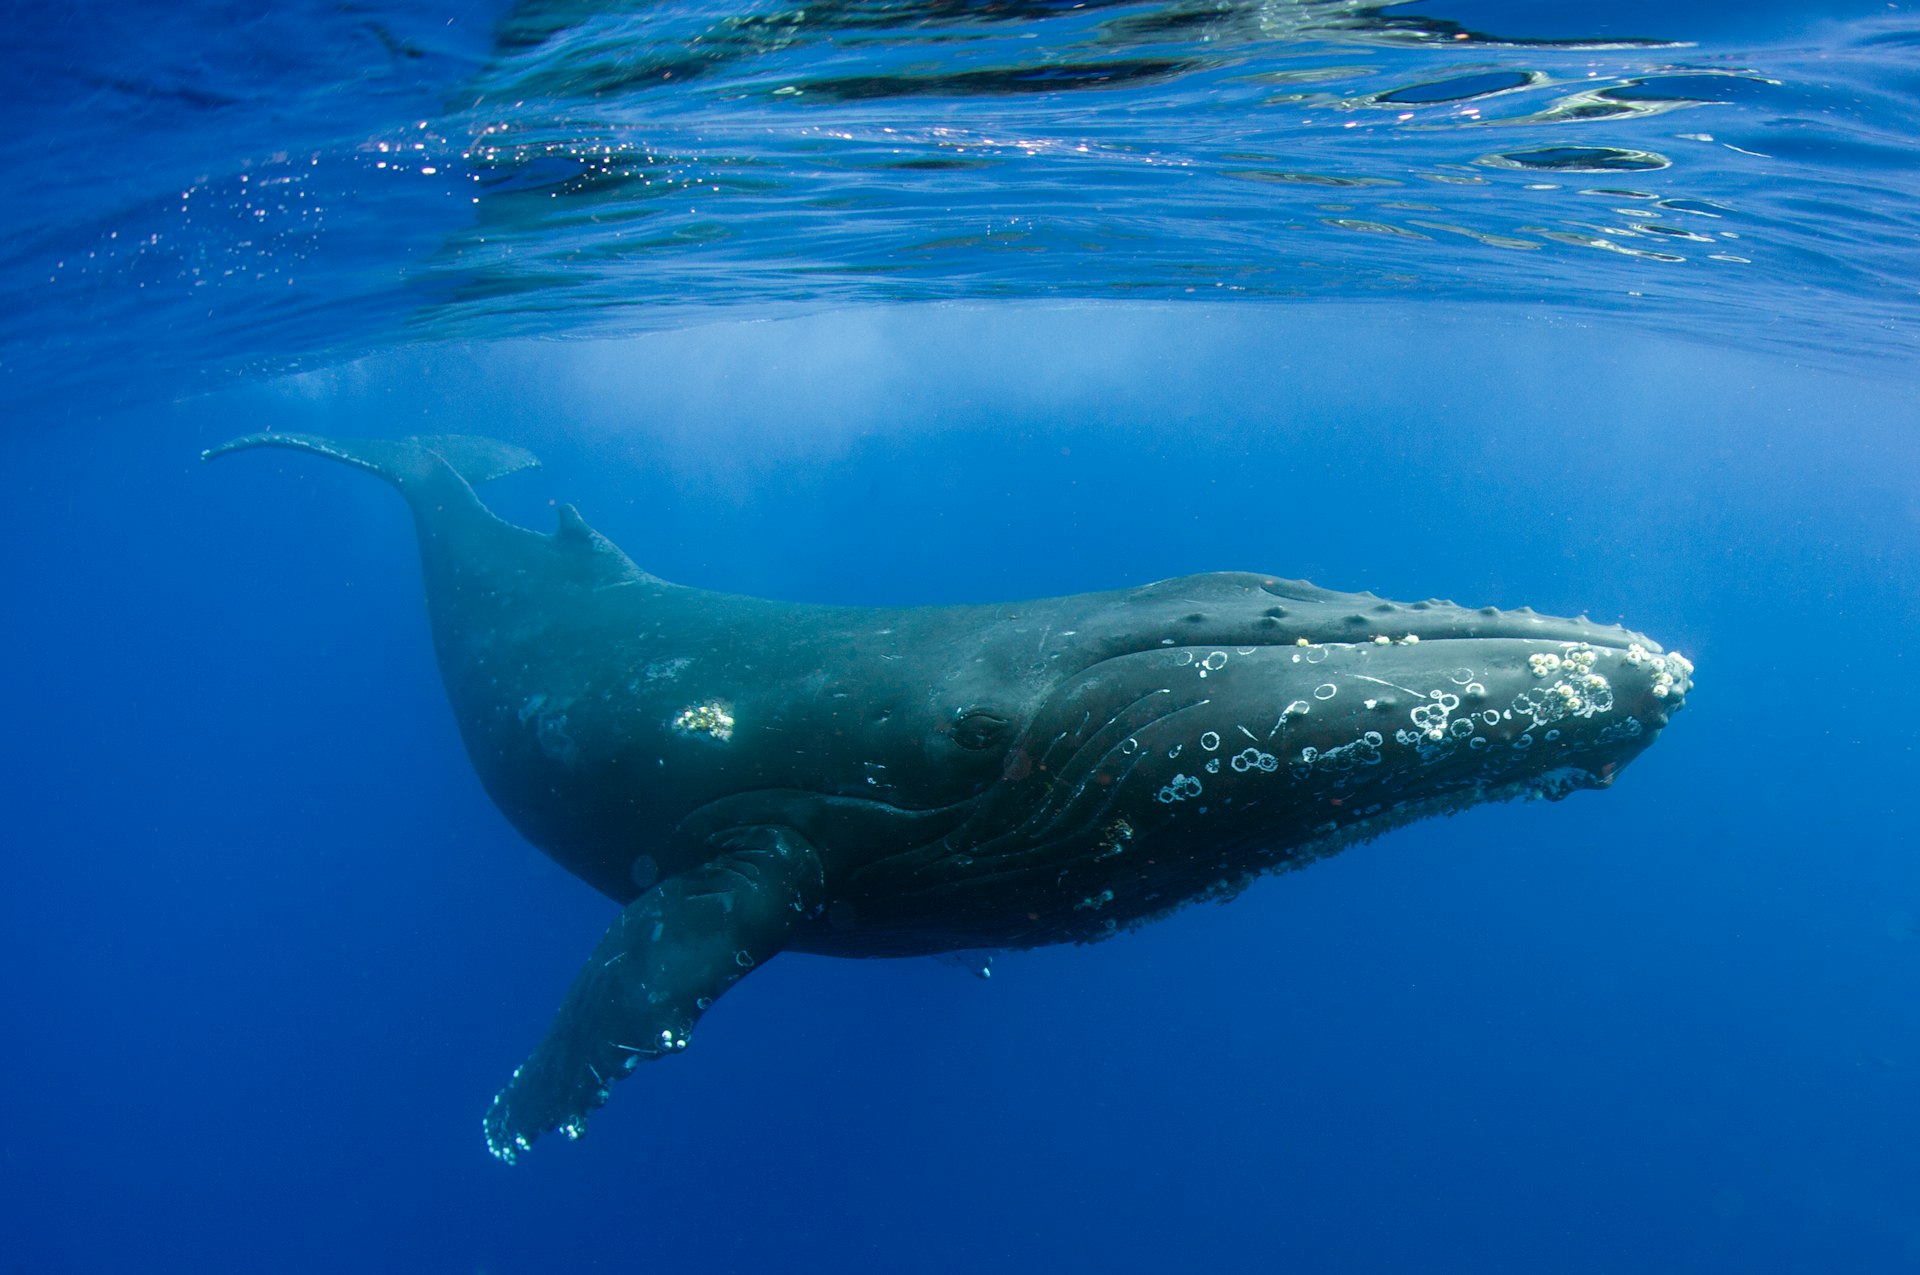 Humpback whale swimming